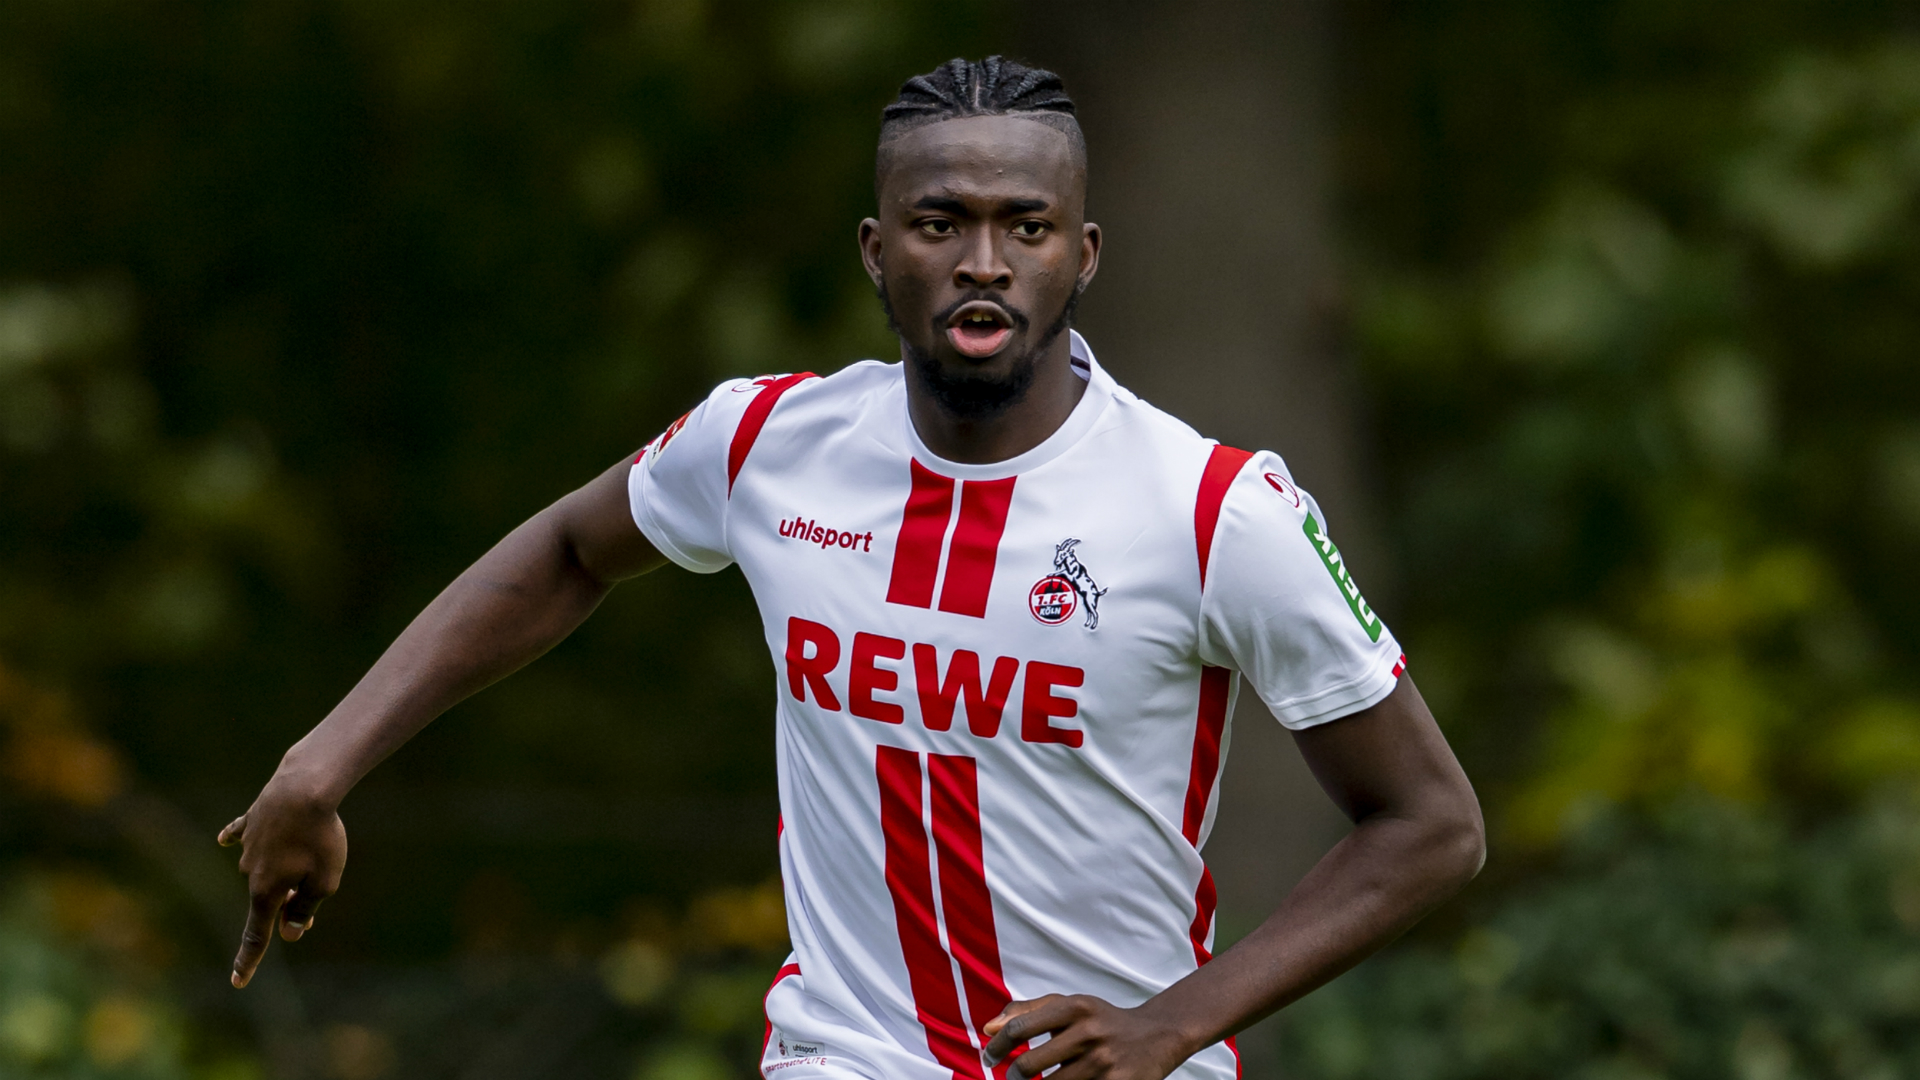 Arokodare needs to get himself to Bundesliga level – Koln general manager Heldt